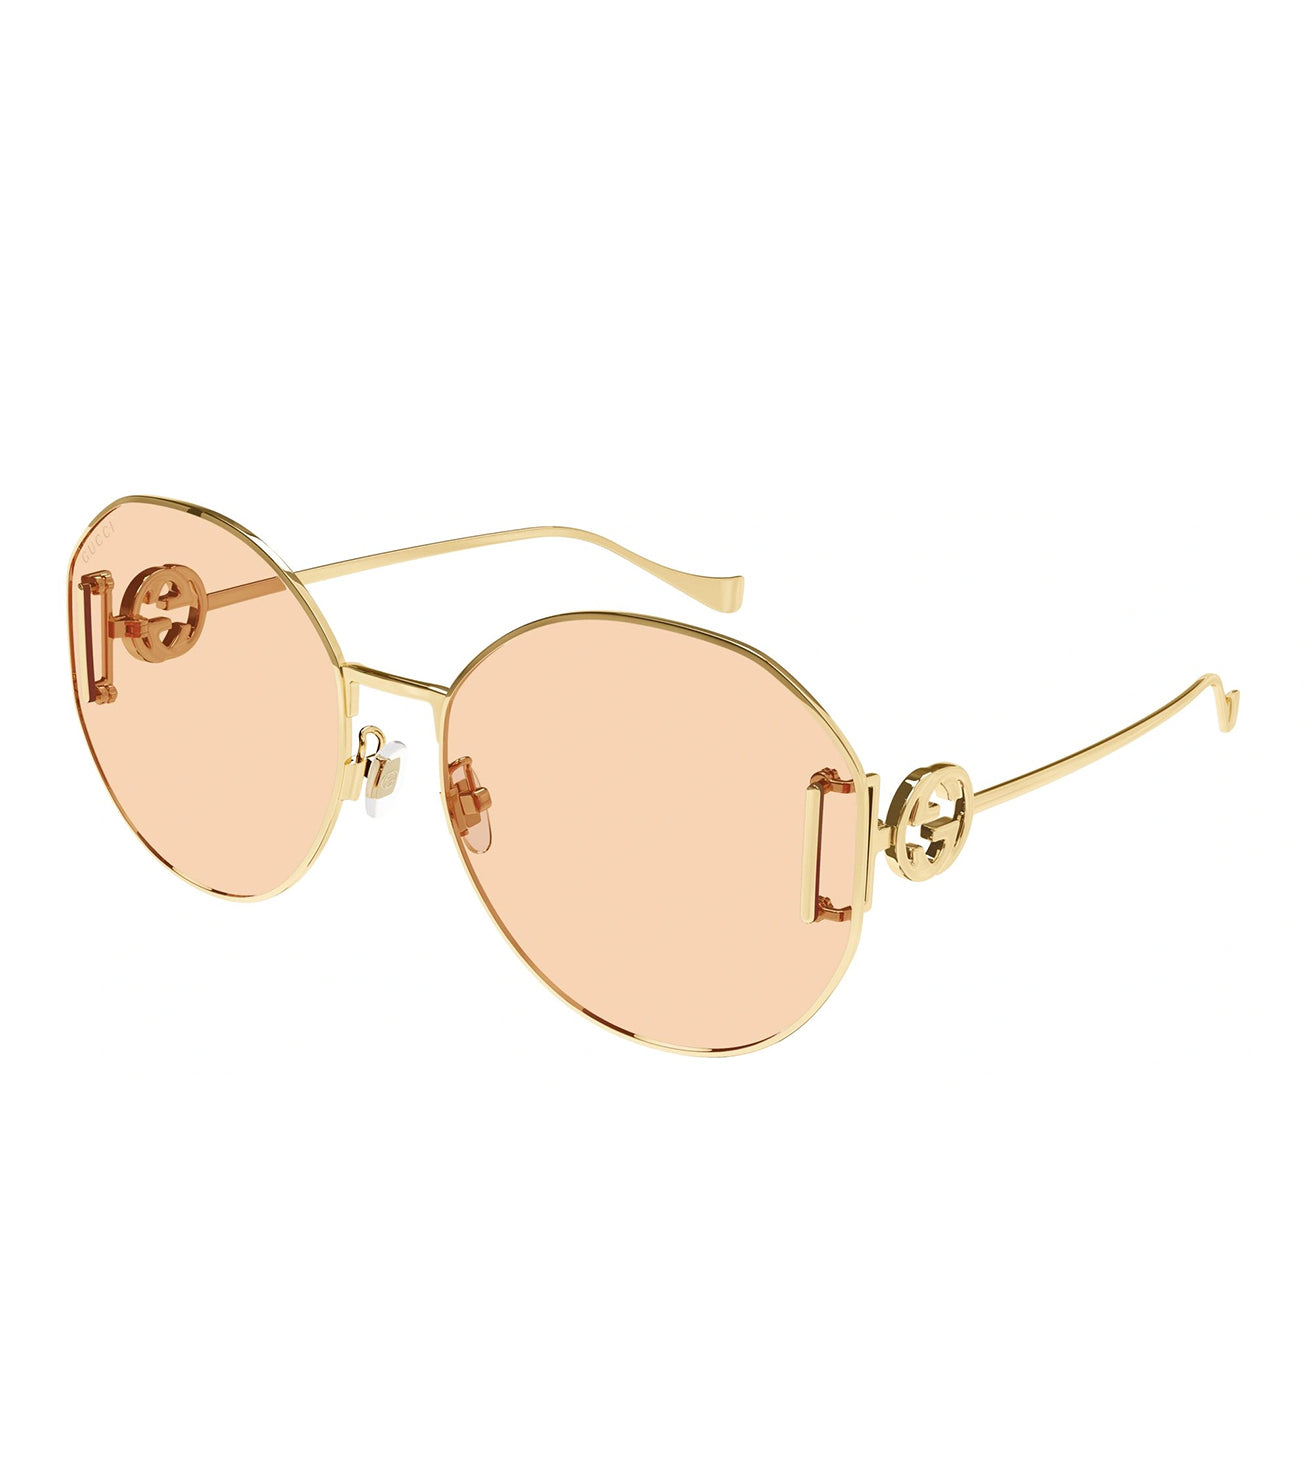 Gucci Women's Pink Round Sunglasses